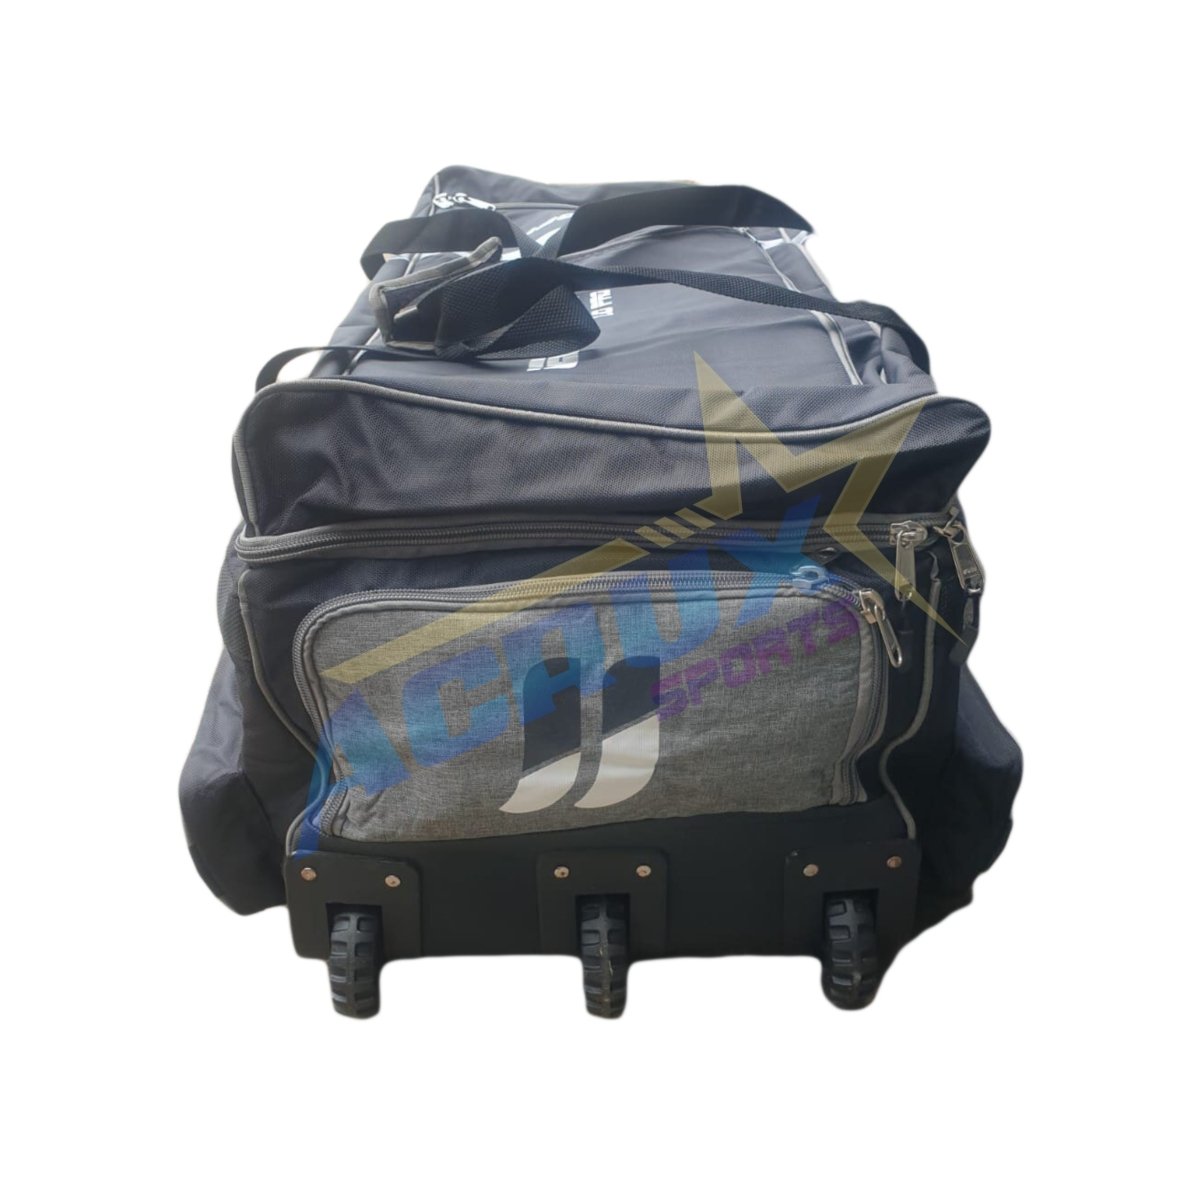 JJ Sports Celestial Pro 1.0 Cricket Kit Bag Wheelie - Acrux Sports